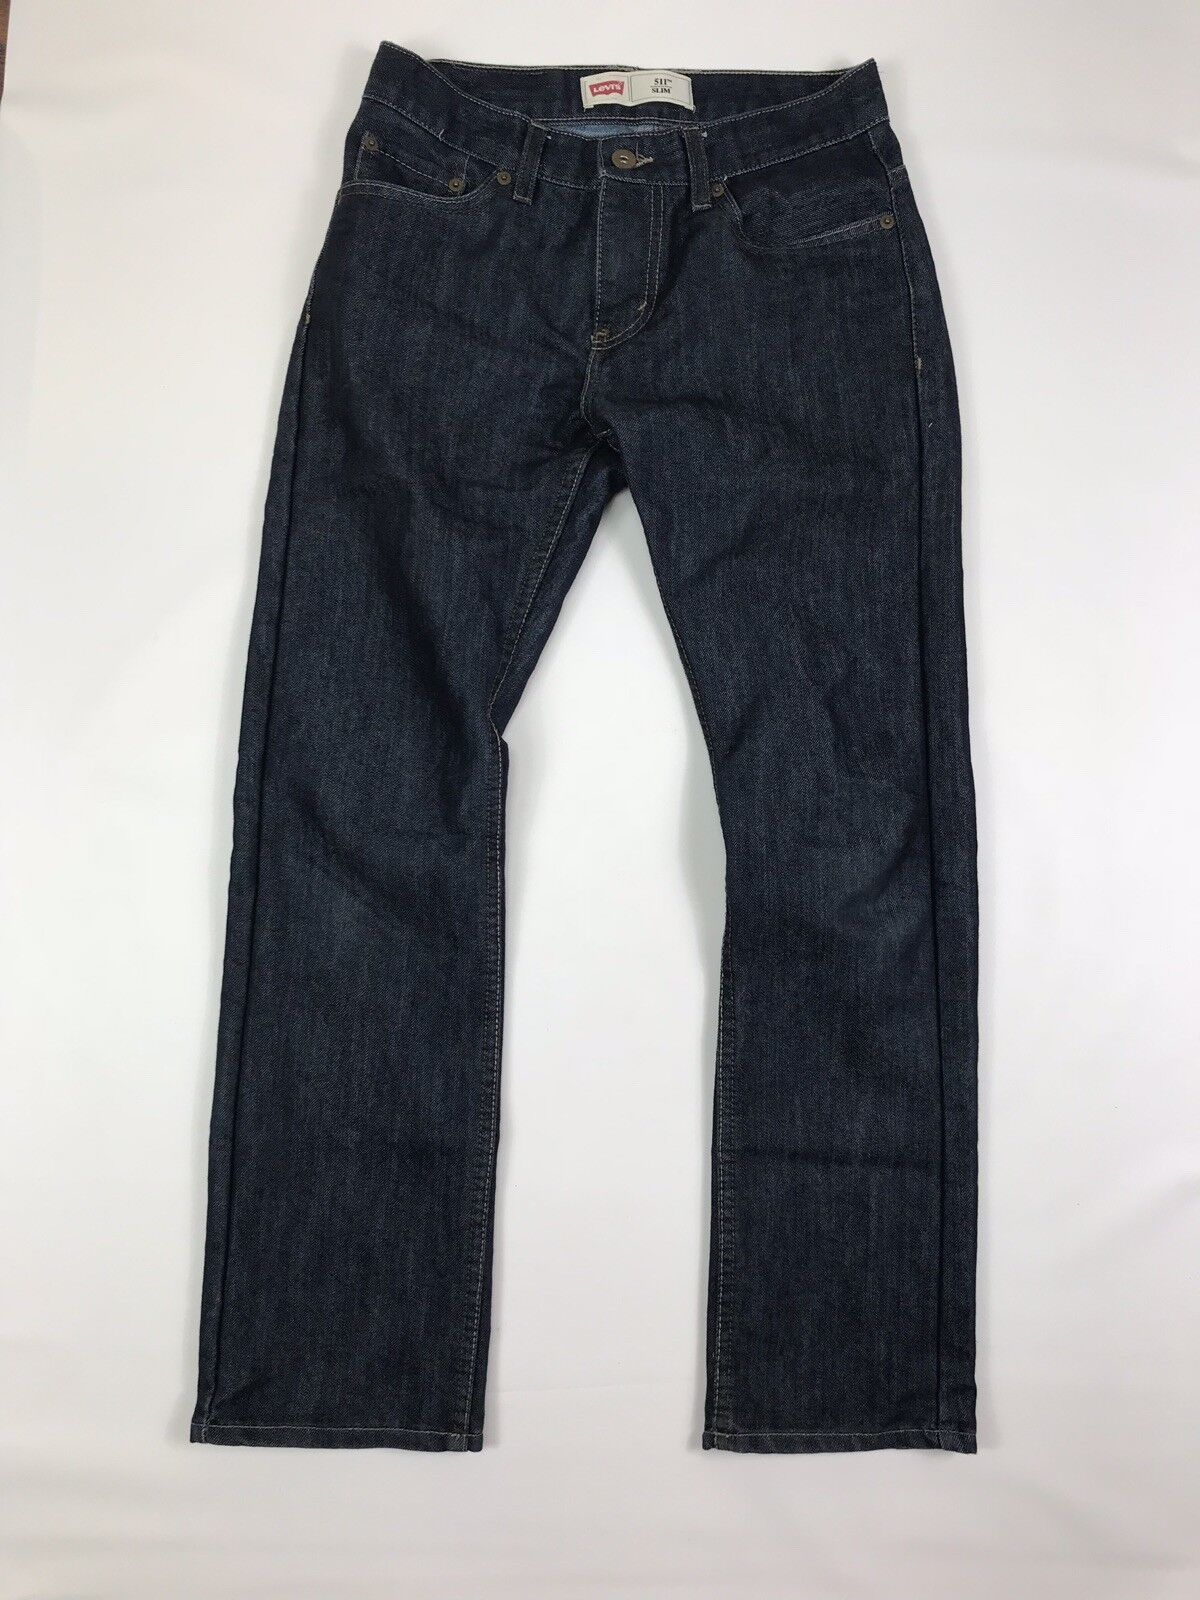 Primary image for Levi's 511 Slim Boys 14 reg 27 27 Dark Wash Denim Jeans Pants 27x27 EUC